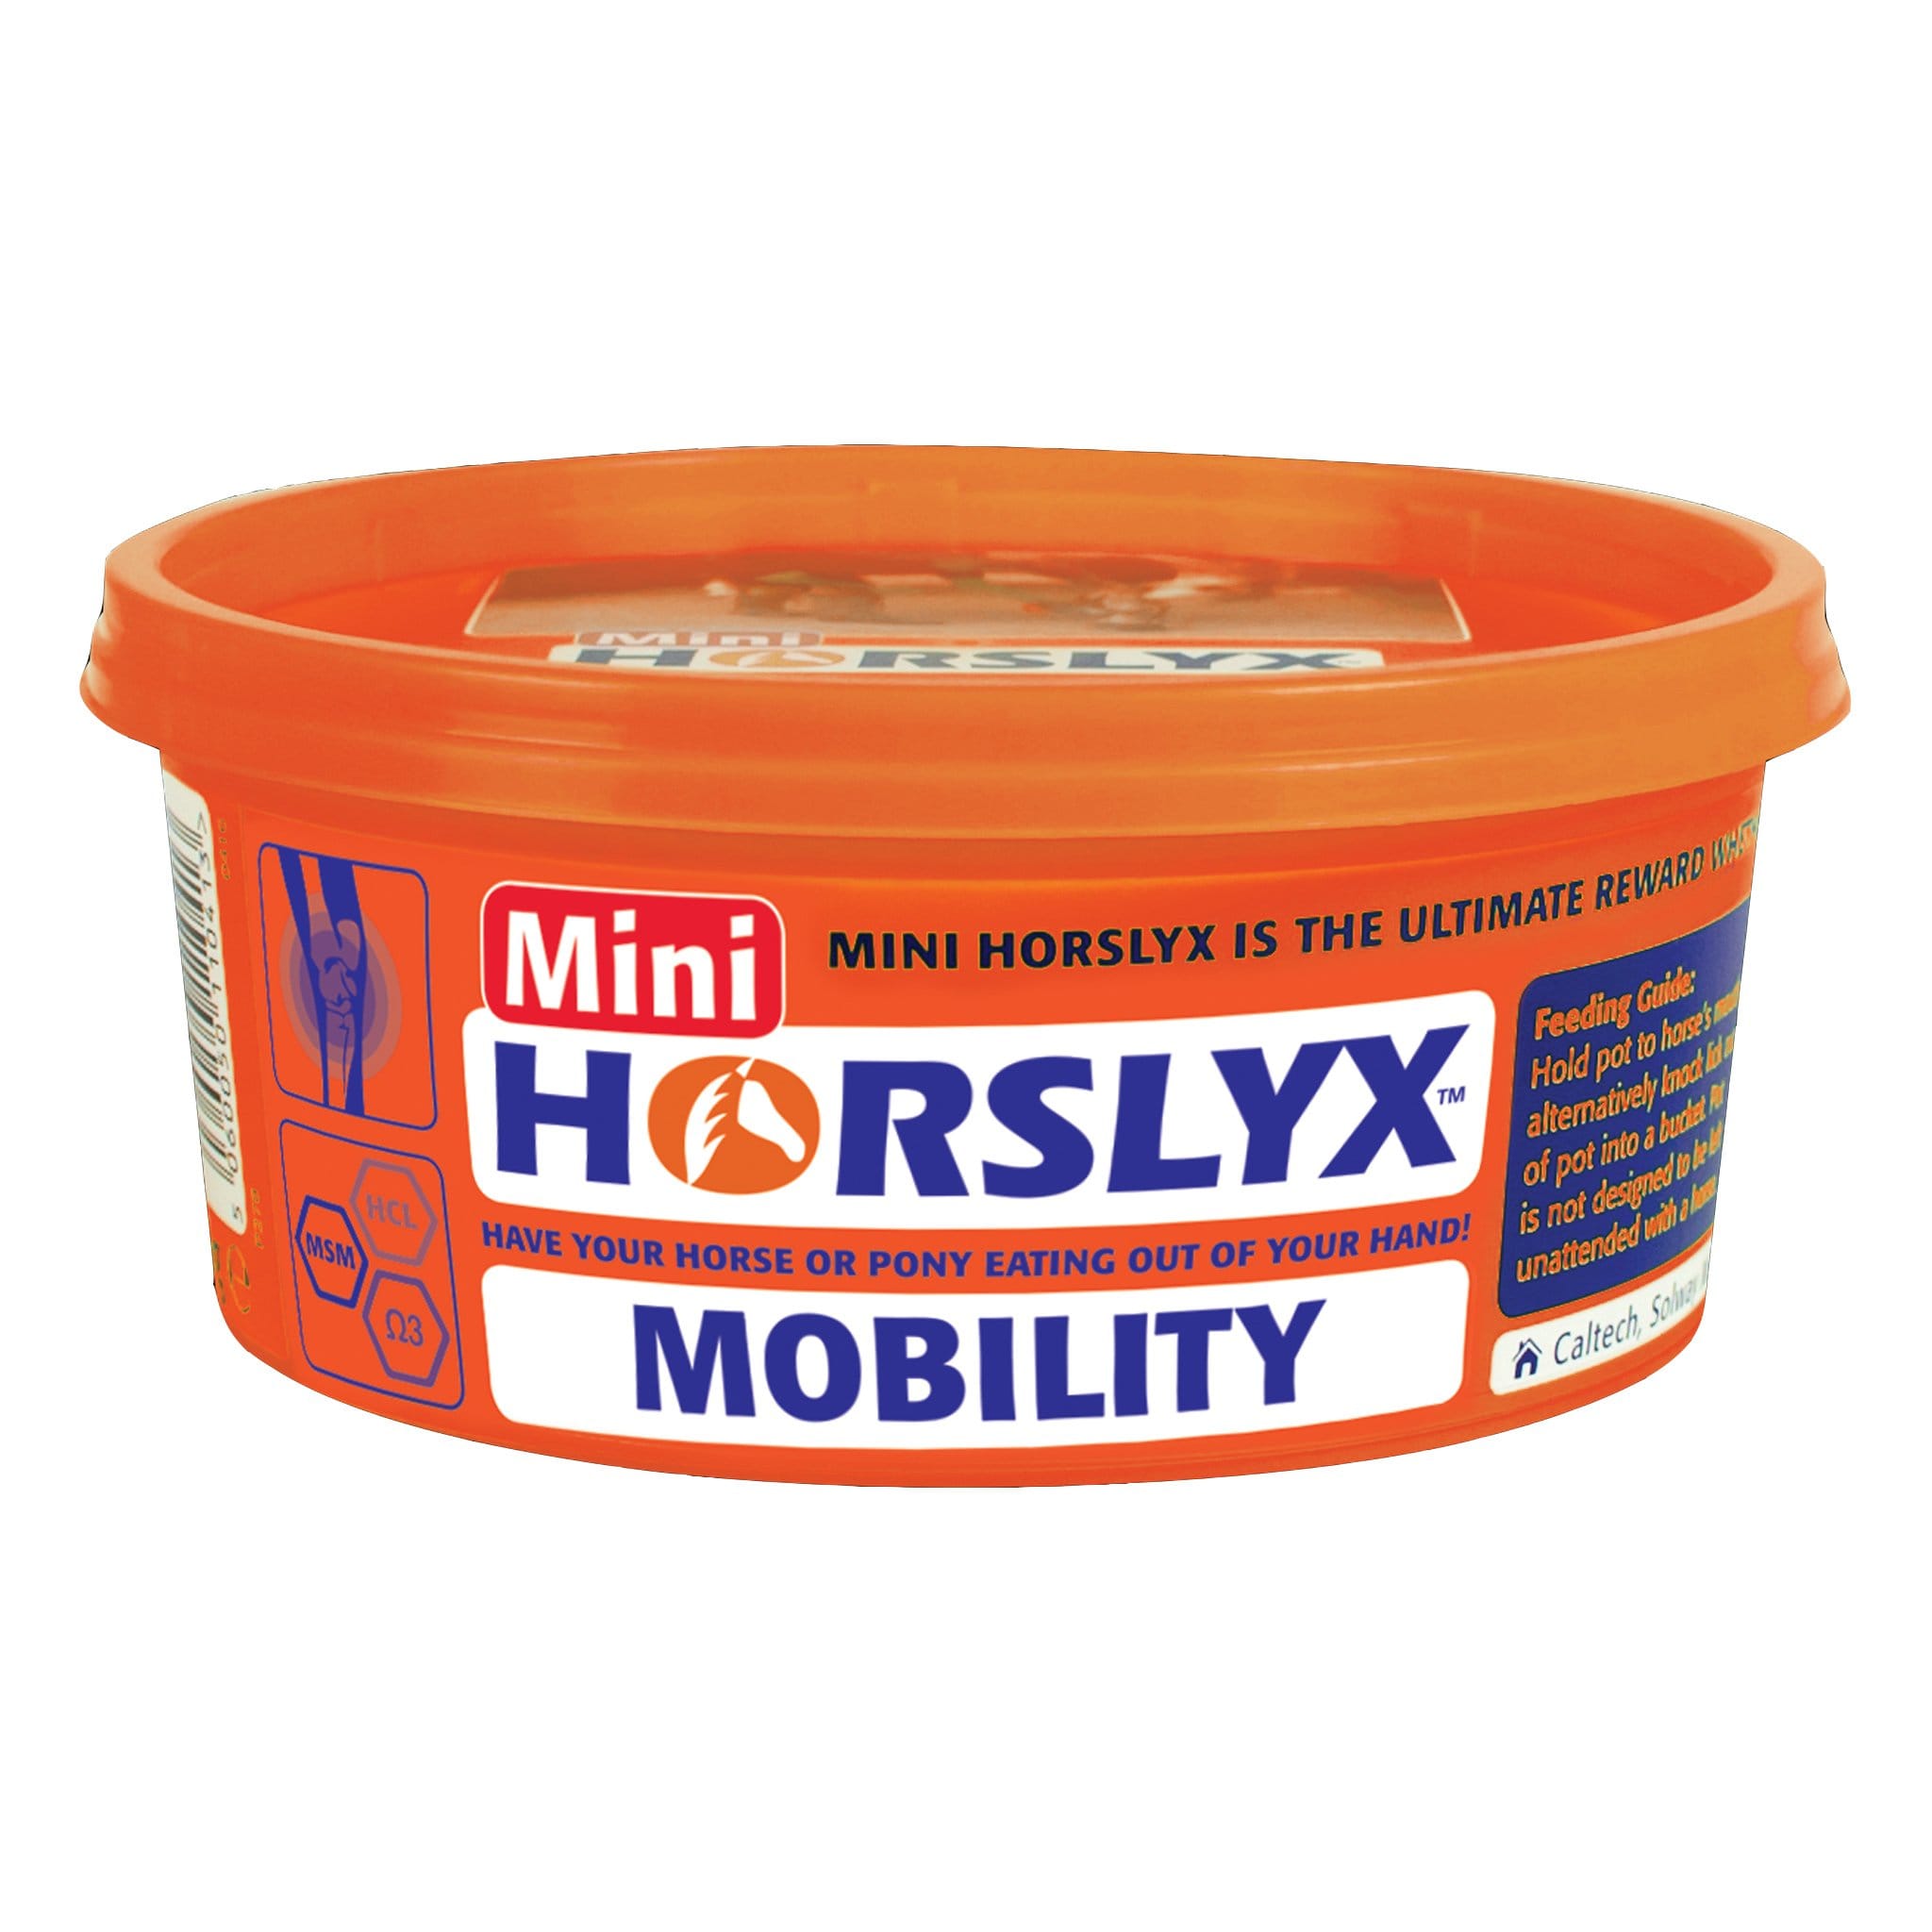 Horslyx Mobility Balancer Lick